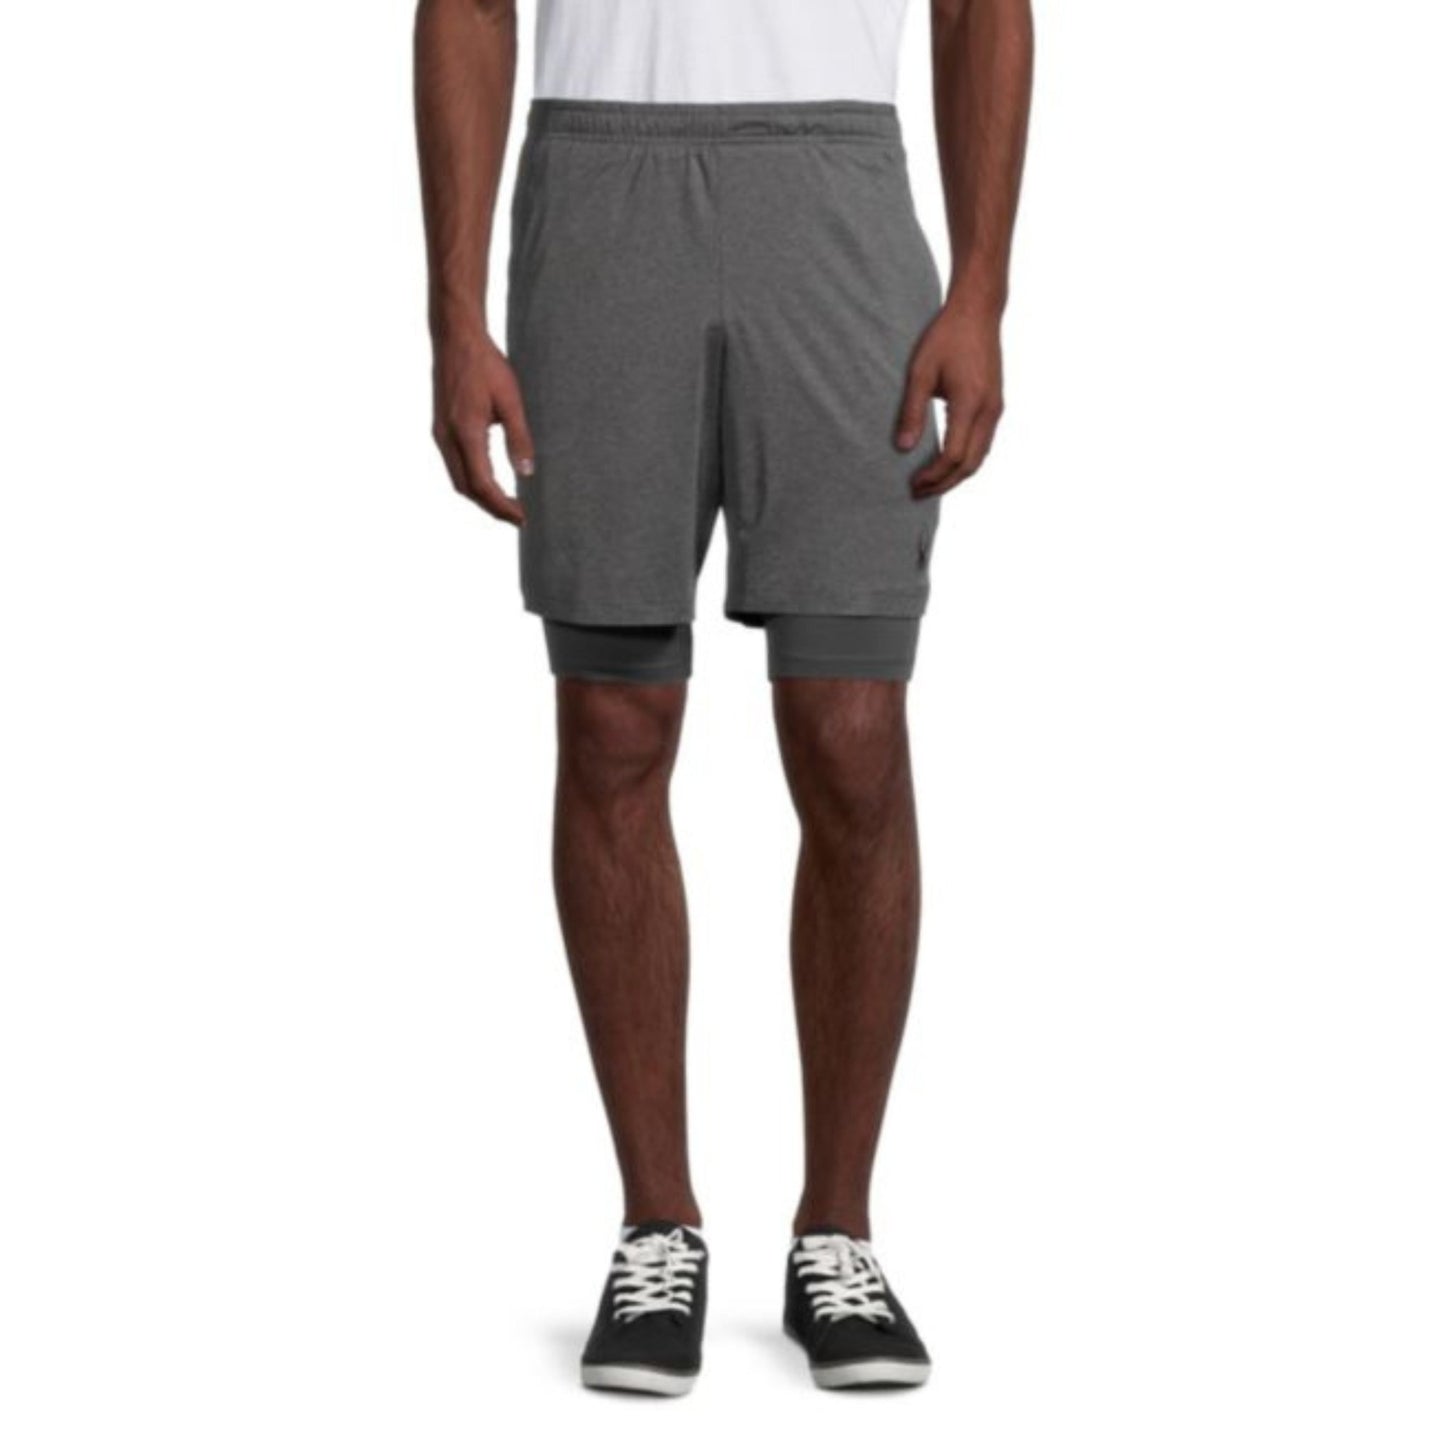 Spyder Men's Double-Layer Shorts - DK Gray